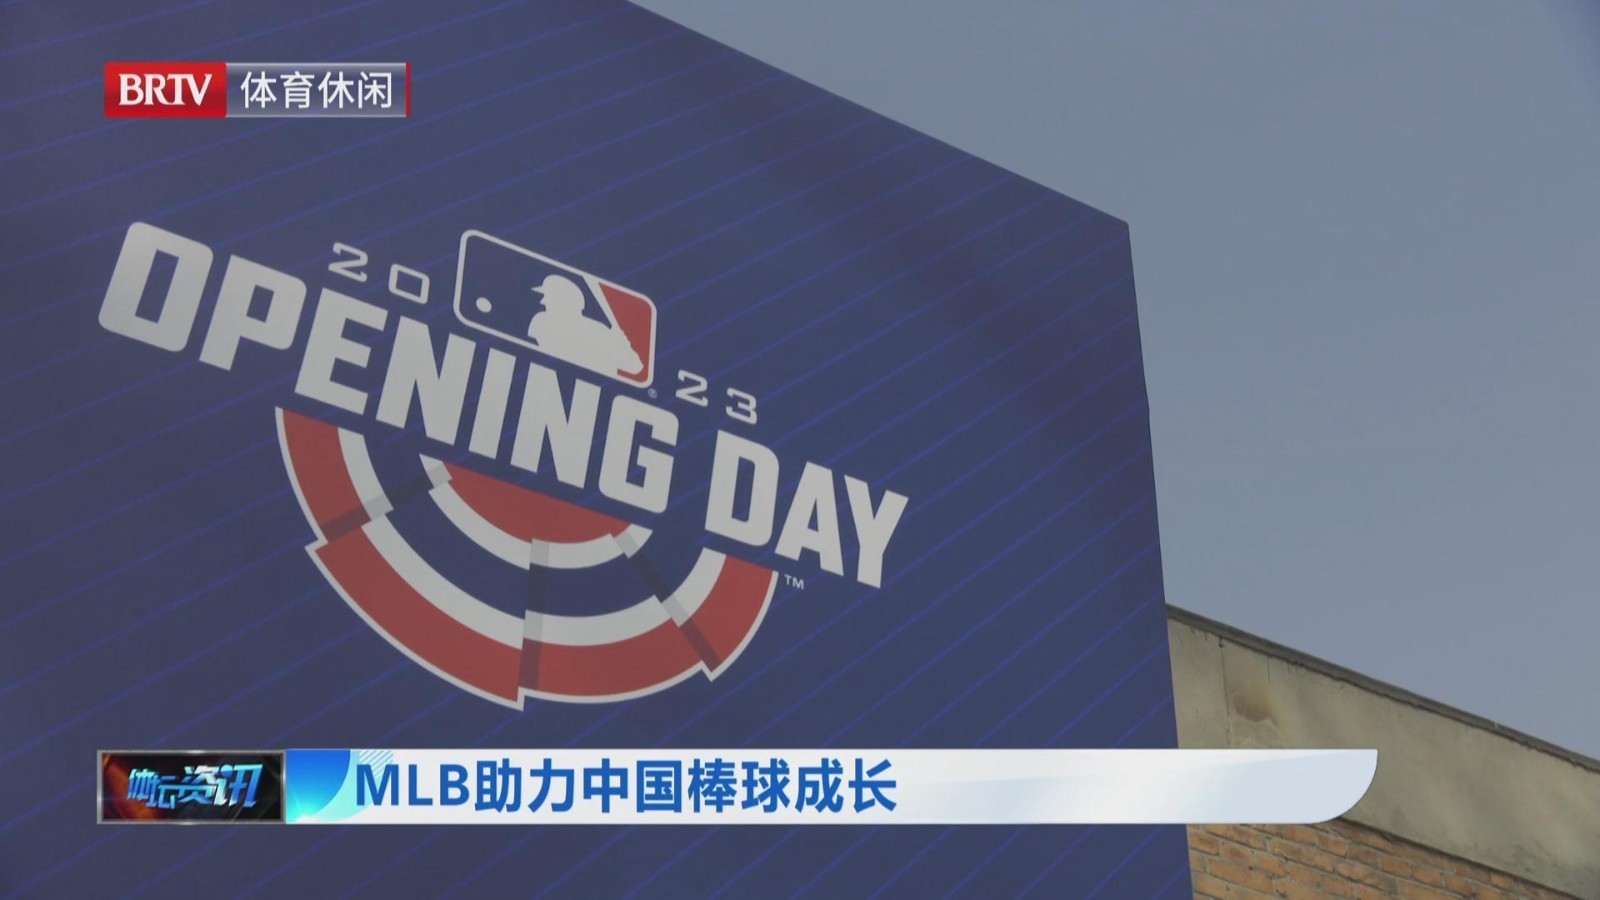 MLB 助力中国棒球成长